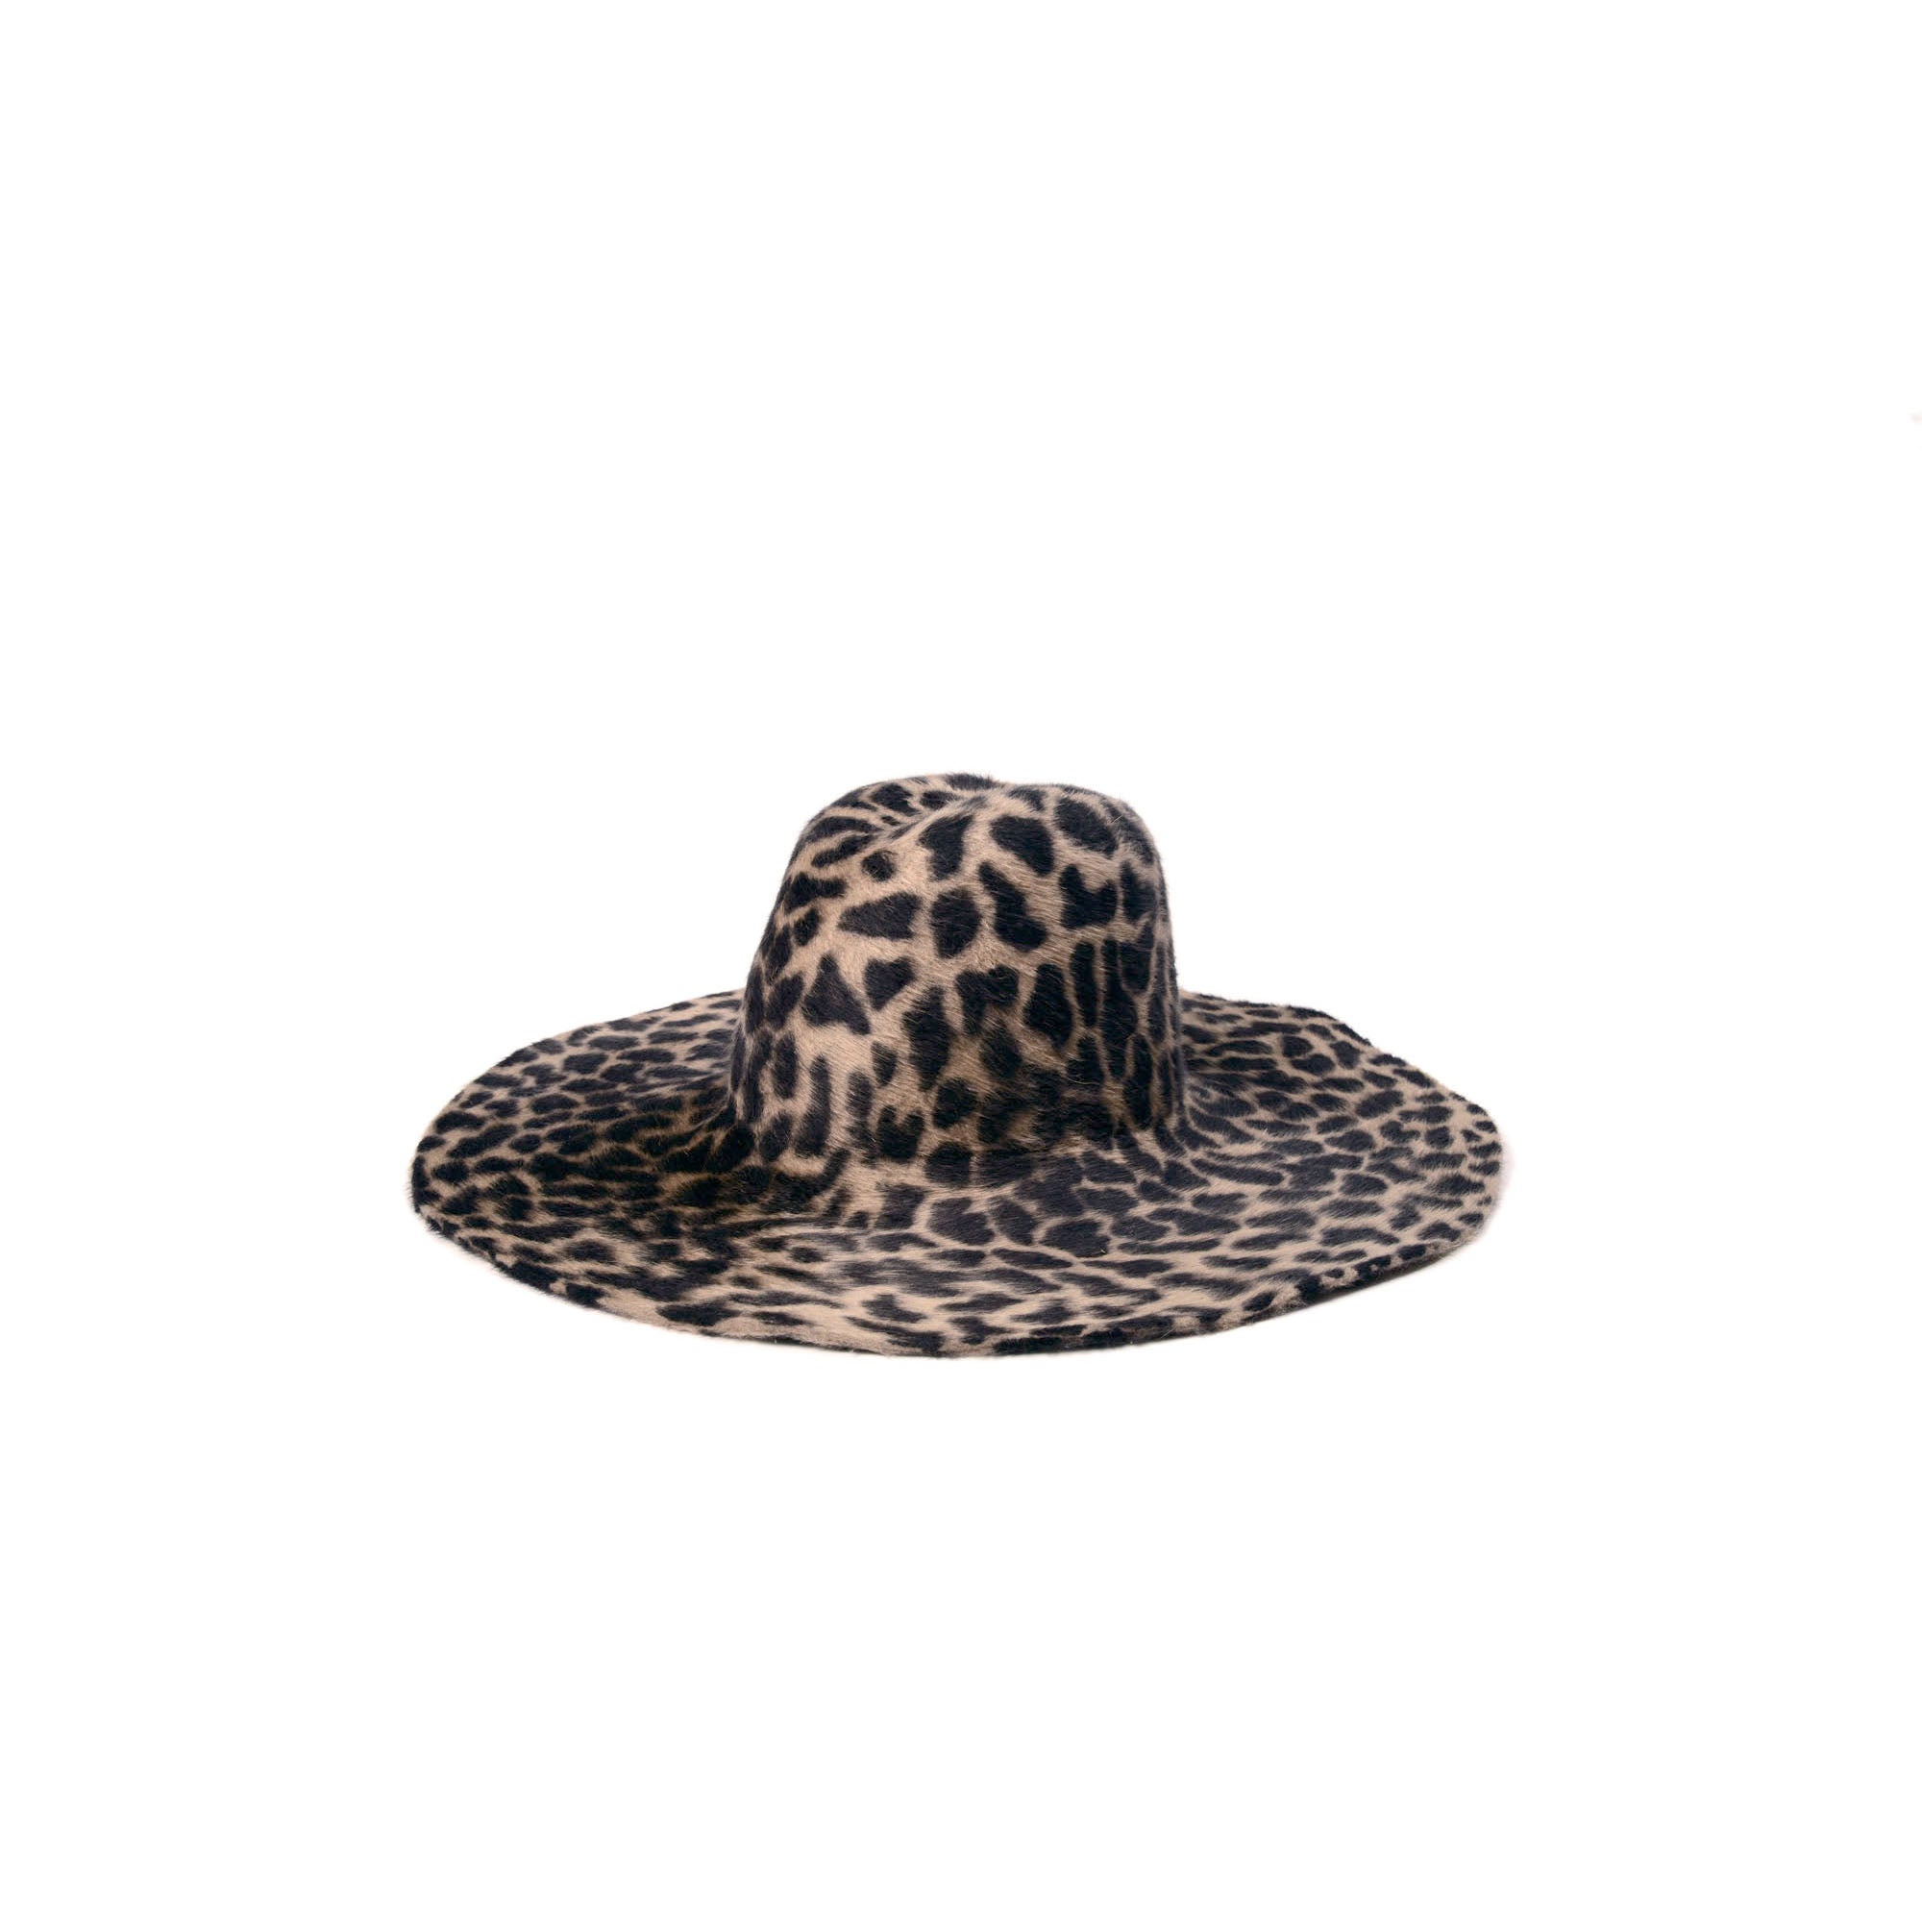 Leopard print felt hat with wide brim.